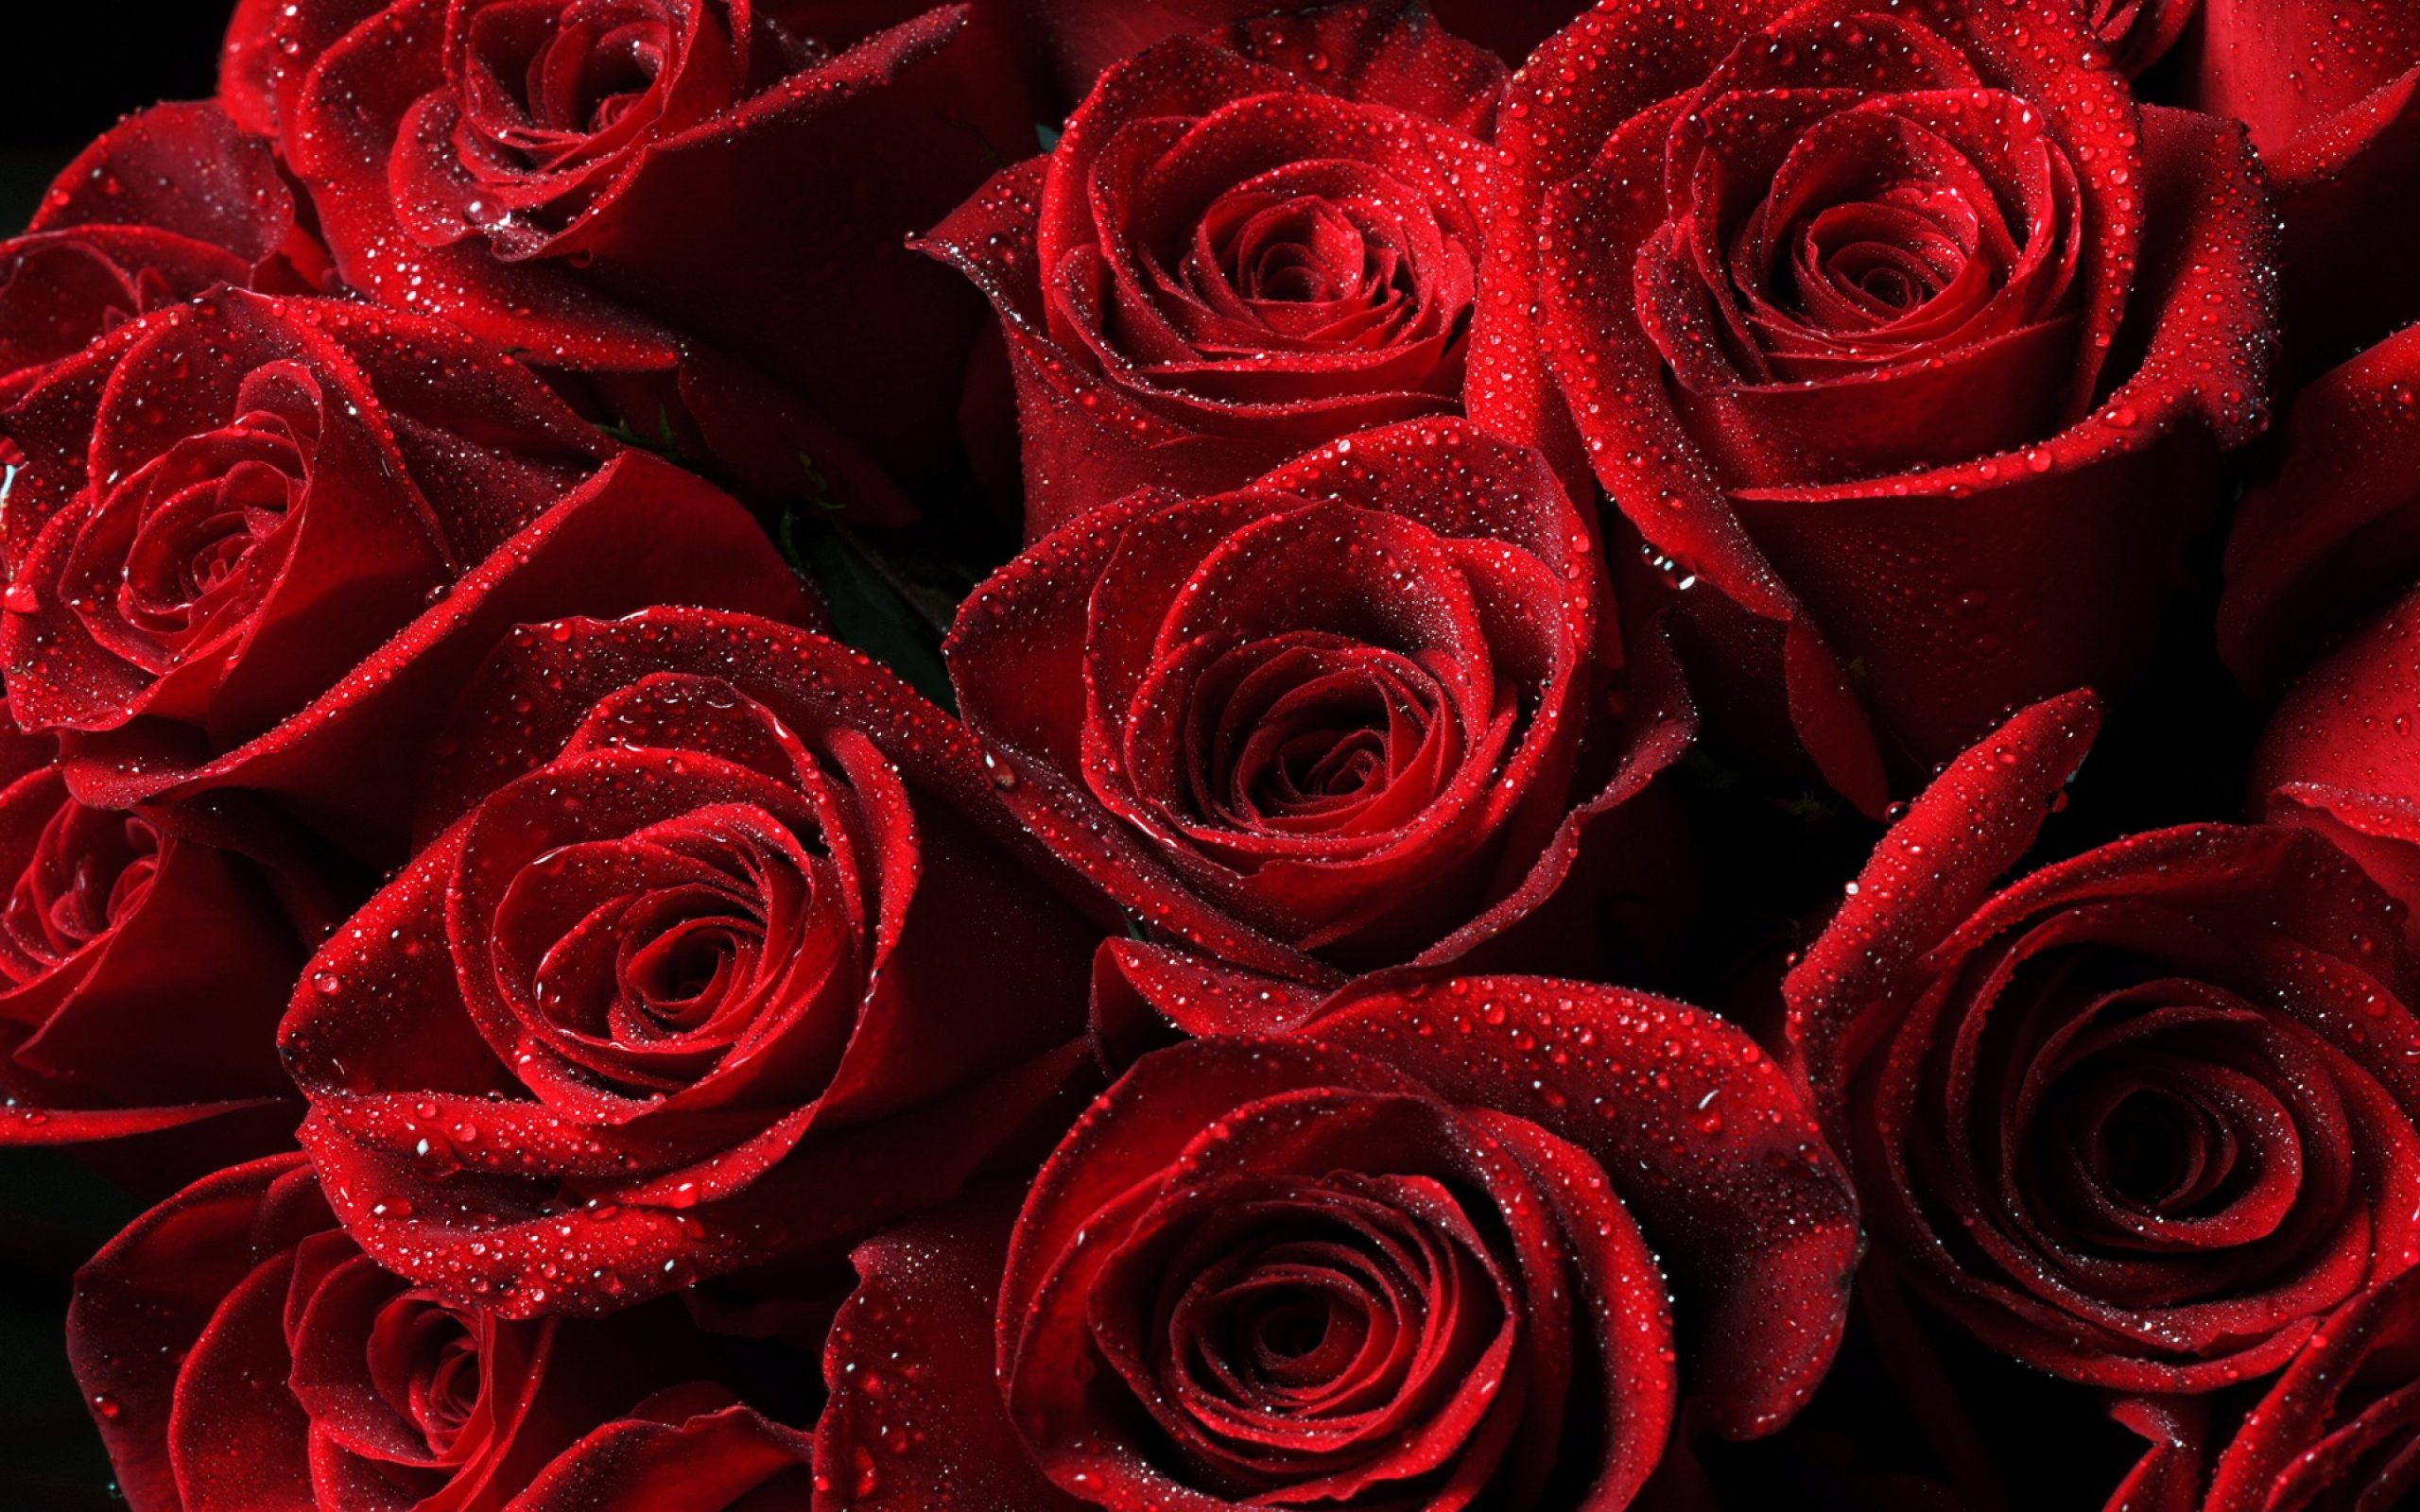 Red Roses Wallpaper Download For Desktop PC amp Mobile